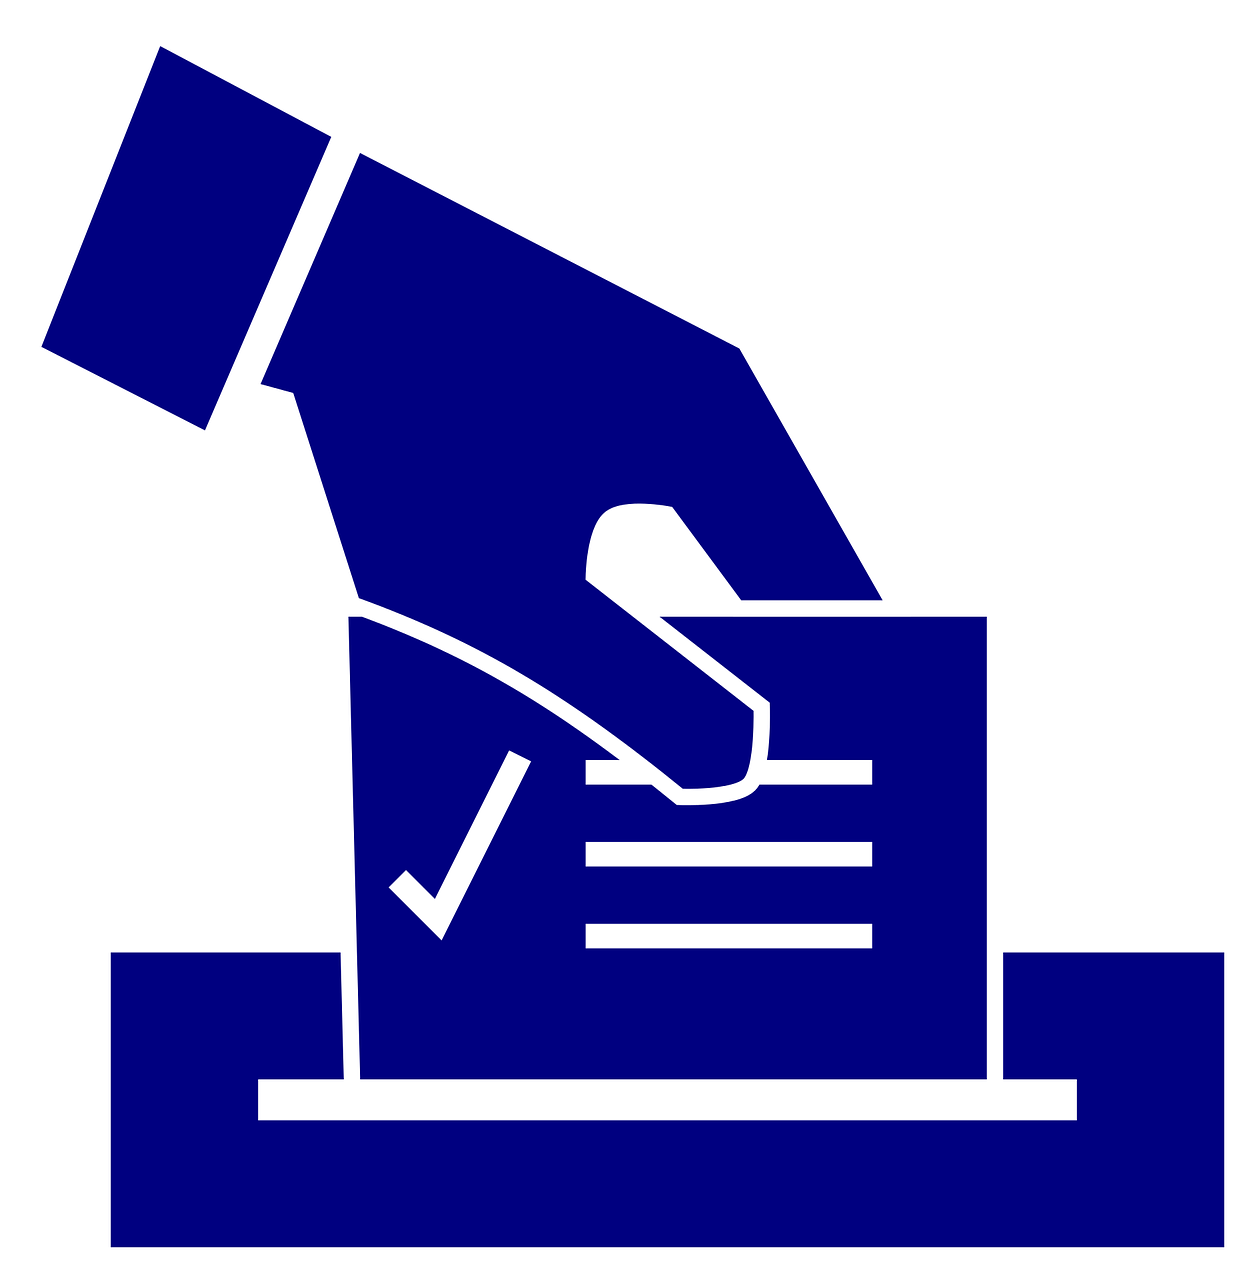 A voting ballot box